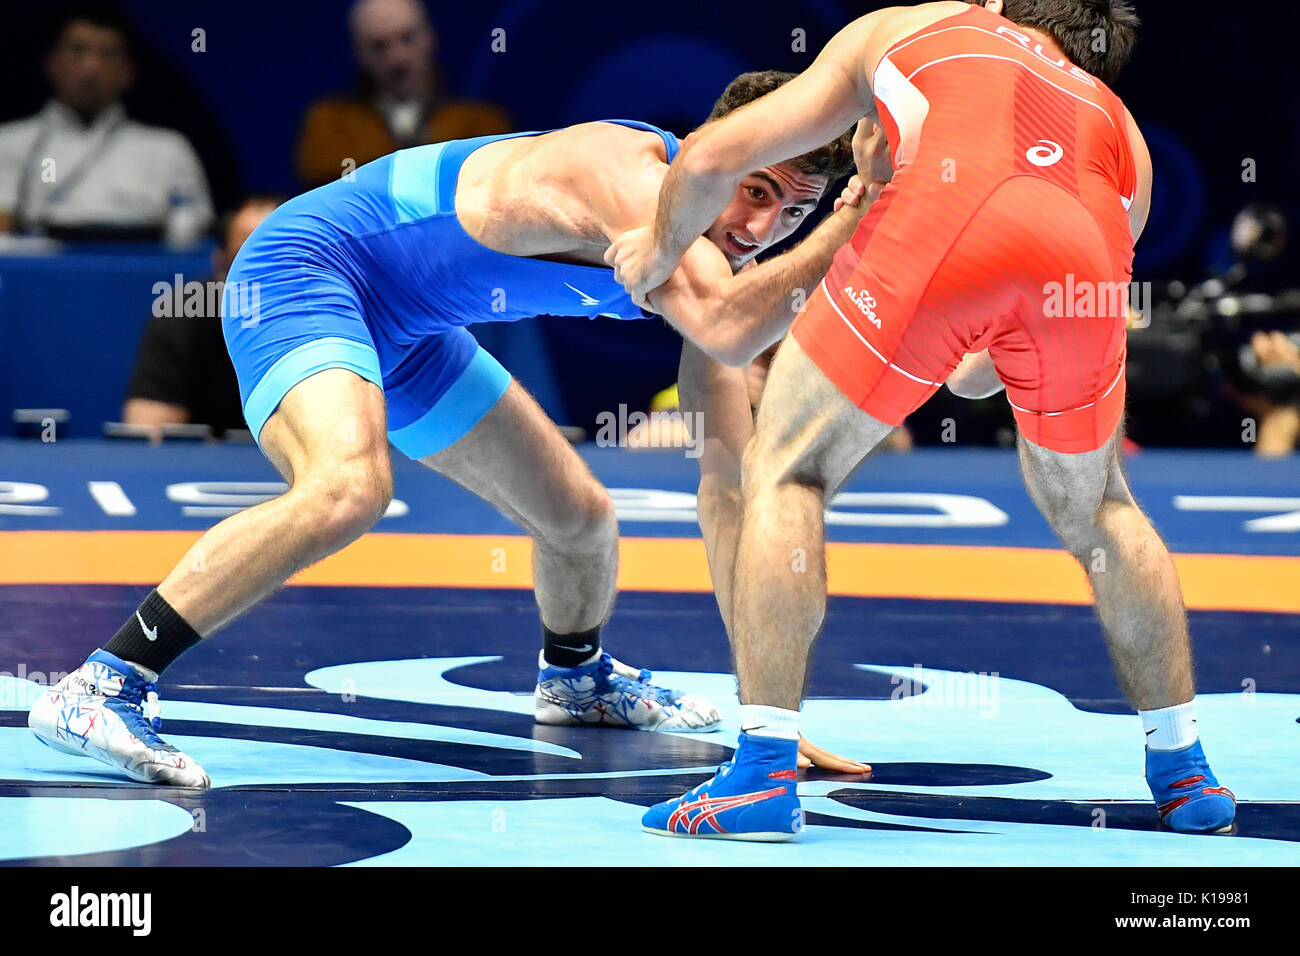 170826) -- PARIS, Aug. 26, 2017 (Xinhua) -- Haji Aliyev (L) of Azerbaijan  competes with Gadzhimurad Rashidov of Russia during the final match of  men's 61kg freestyle wrestling of the FILA World